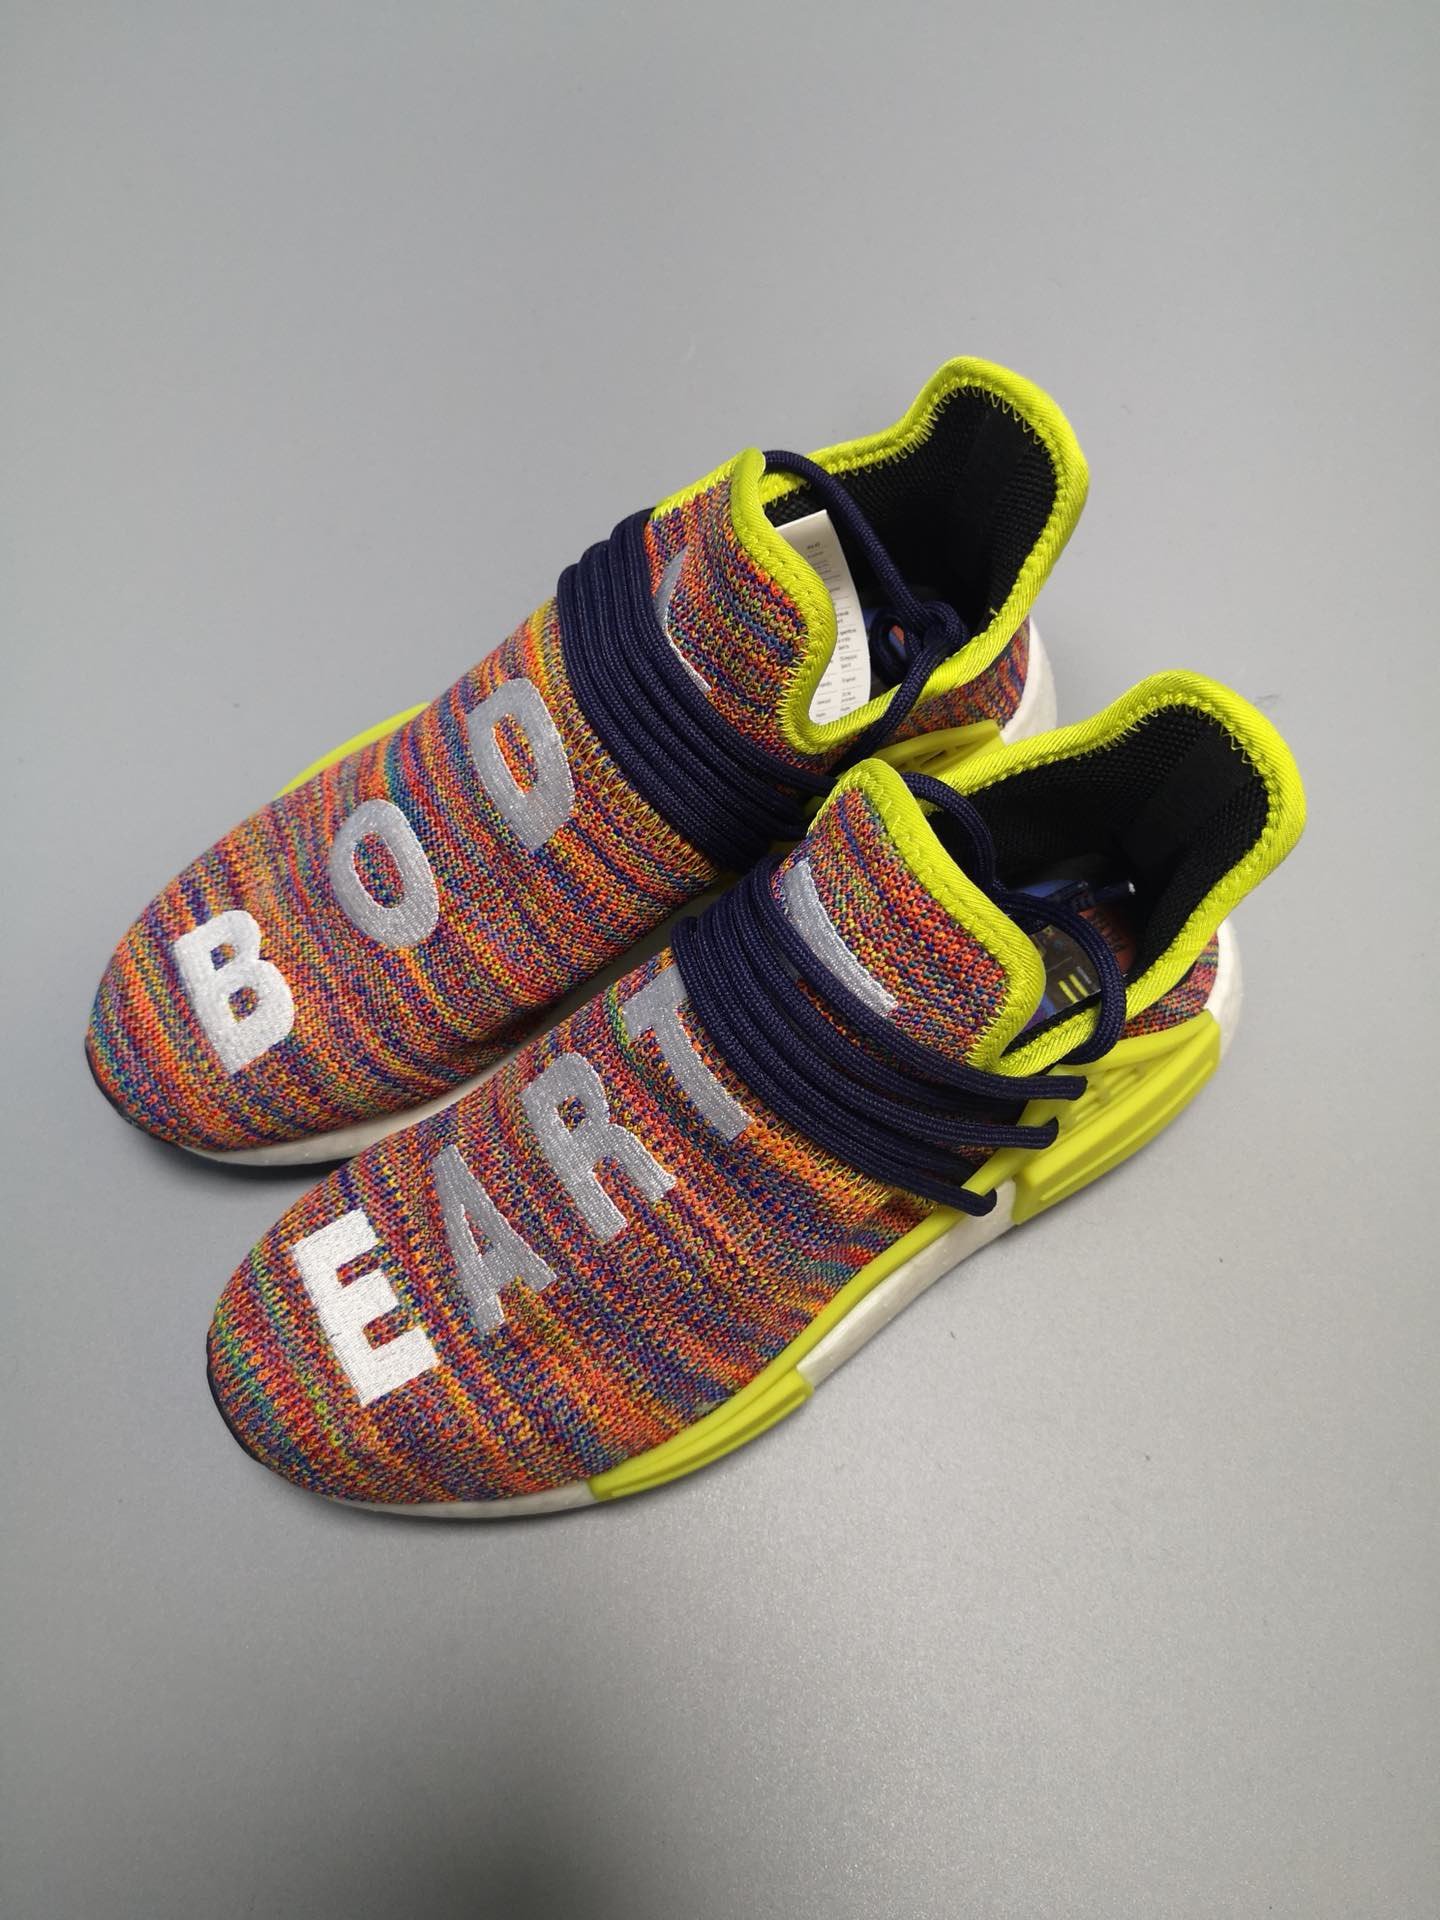 High Quality adidas x Pharrell Williams Human Race NMD Rainbow Trail Body Earth with BASF boost